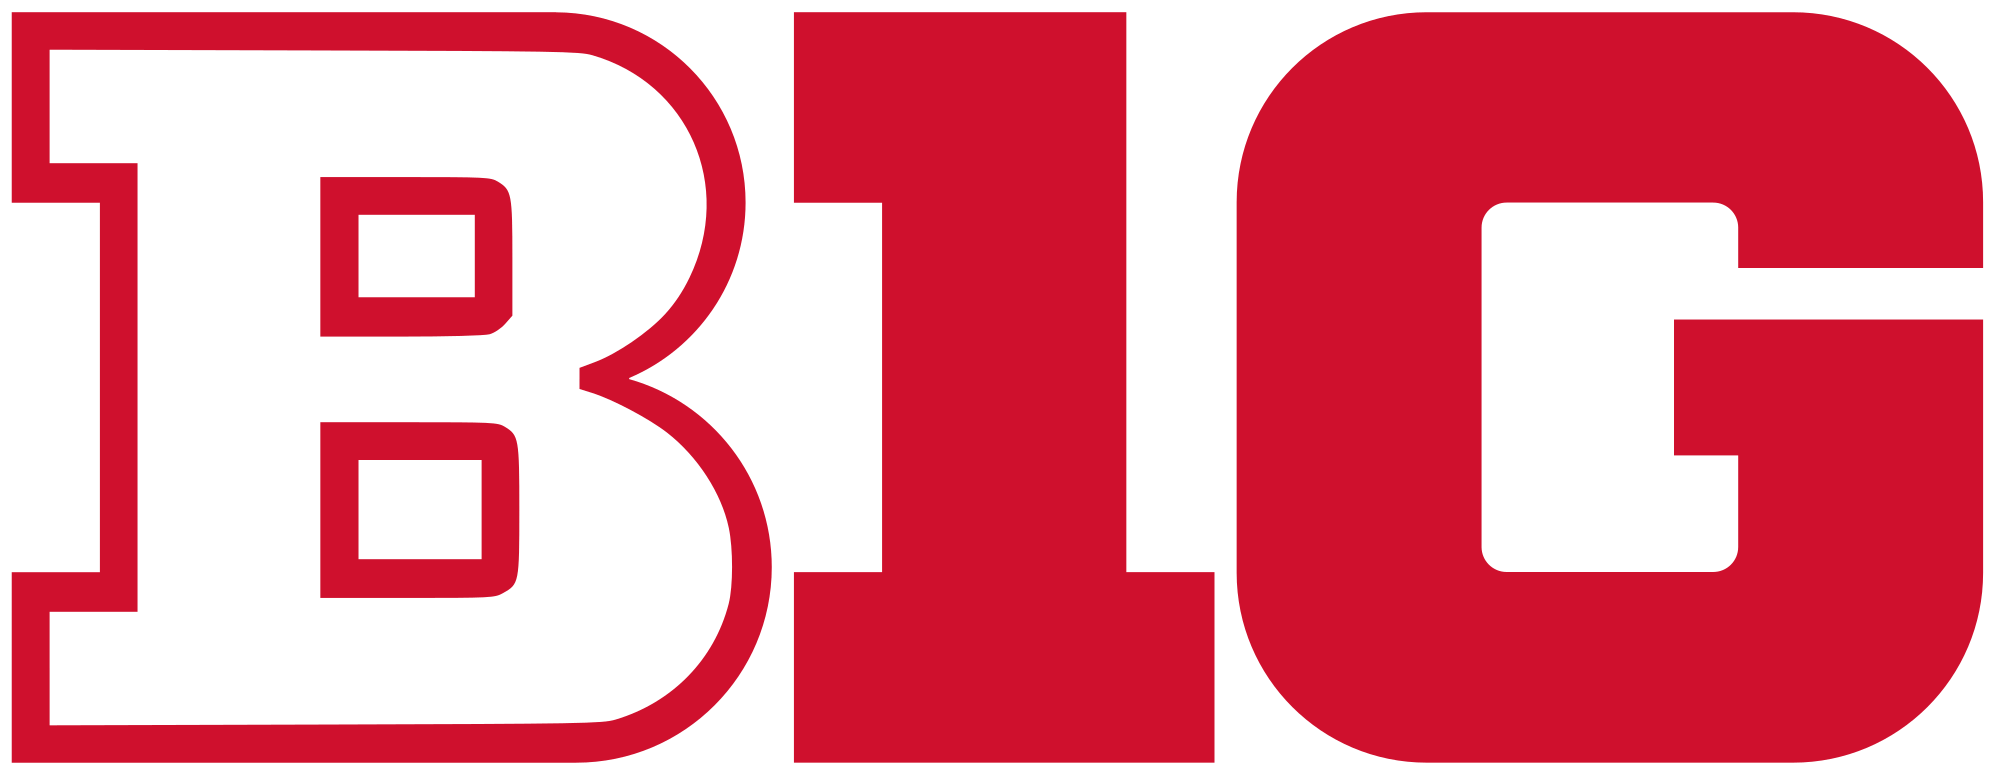 Rutgers Logo - File:Big Ten logo in Rutgers colors.svg - Wikimedia Commons